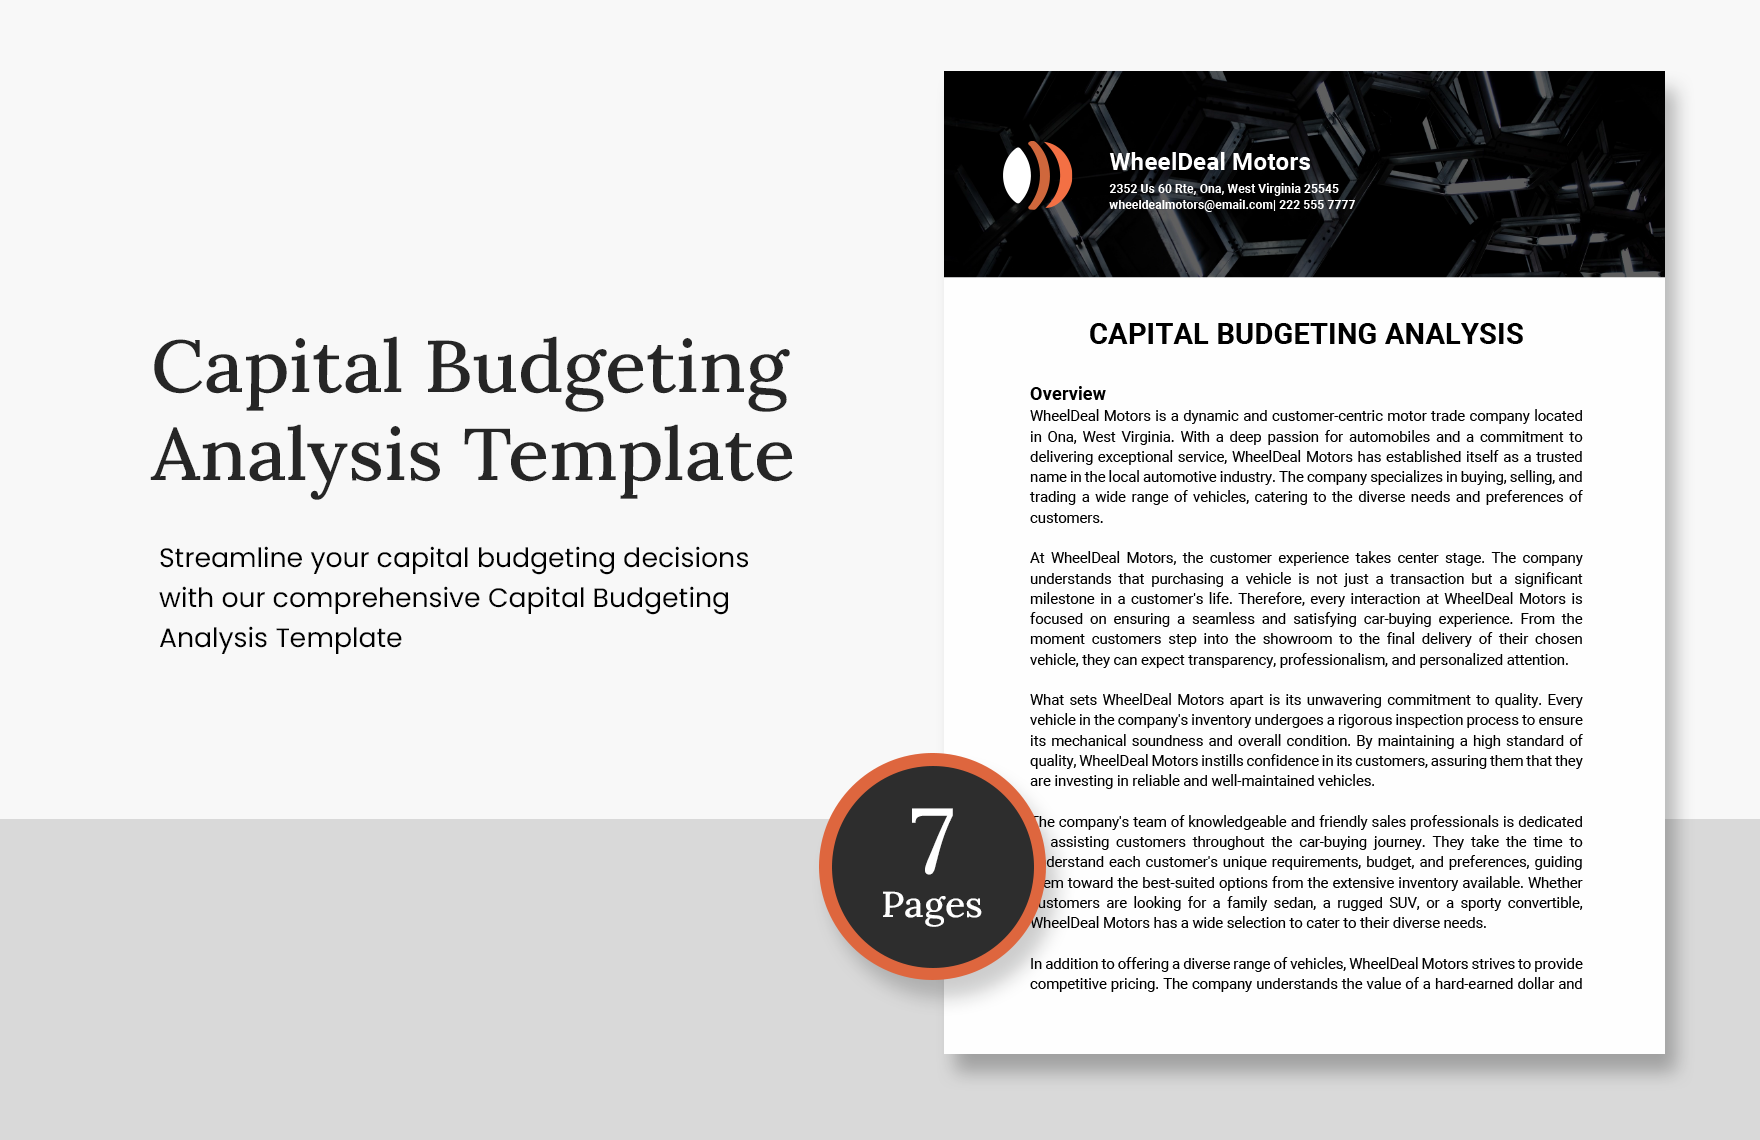 Capital budgeting Analysis Template